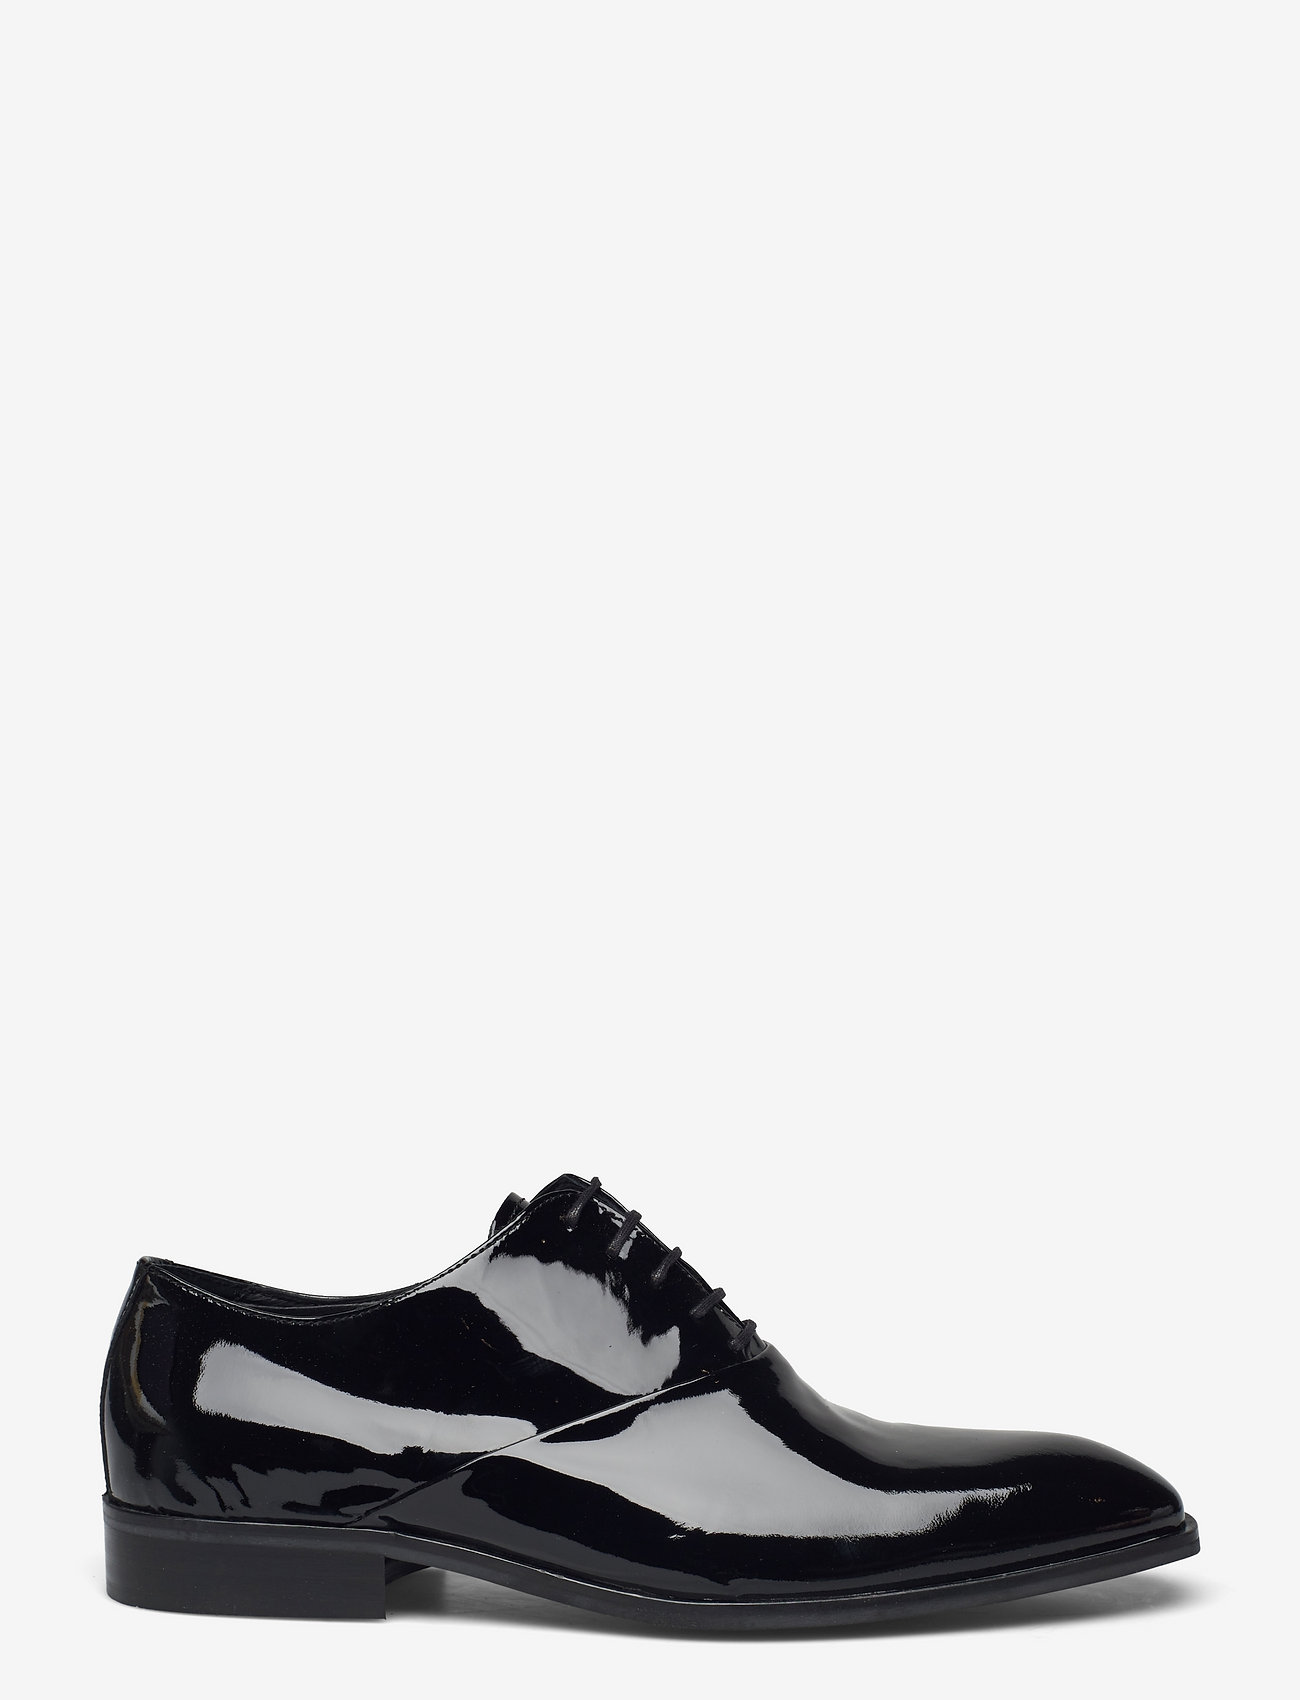 Playboy Footwear - PB1044 - lackschuhe - black - 1